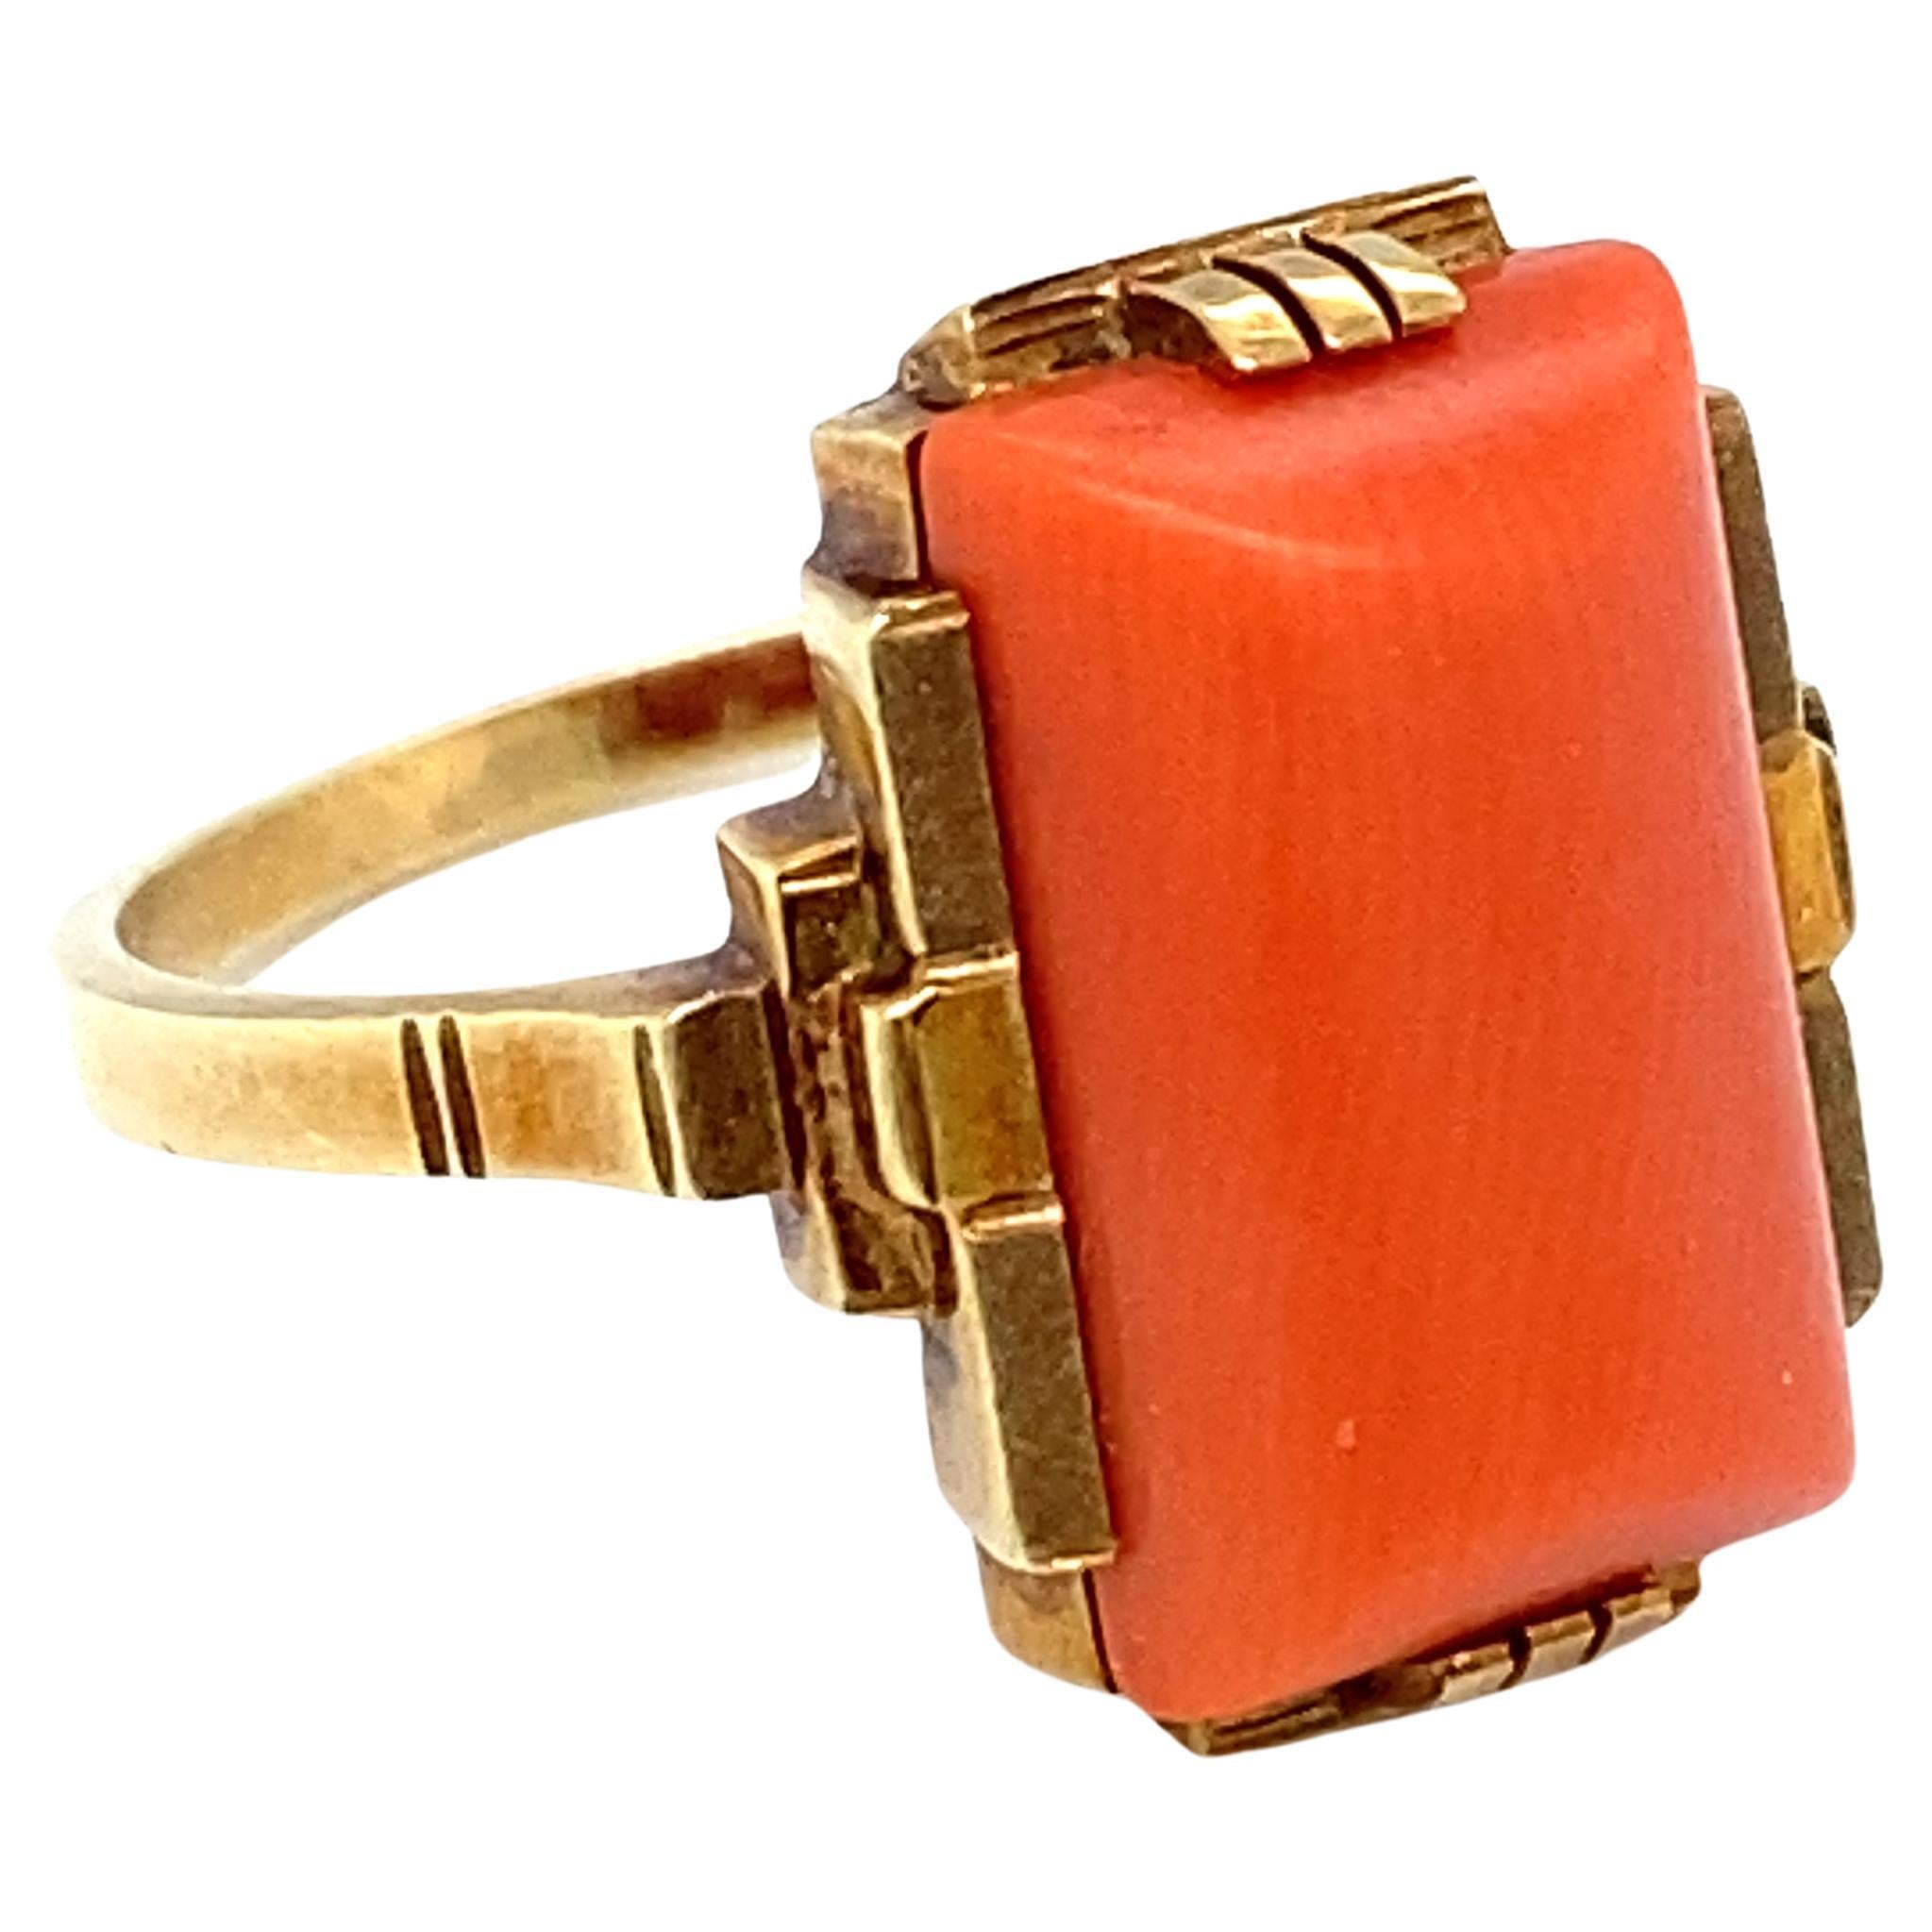 Circa 1940s Art Deco Style Rectangular Coral Ring in 14 Karat Yellow Gold